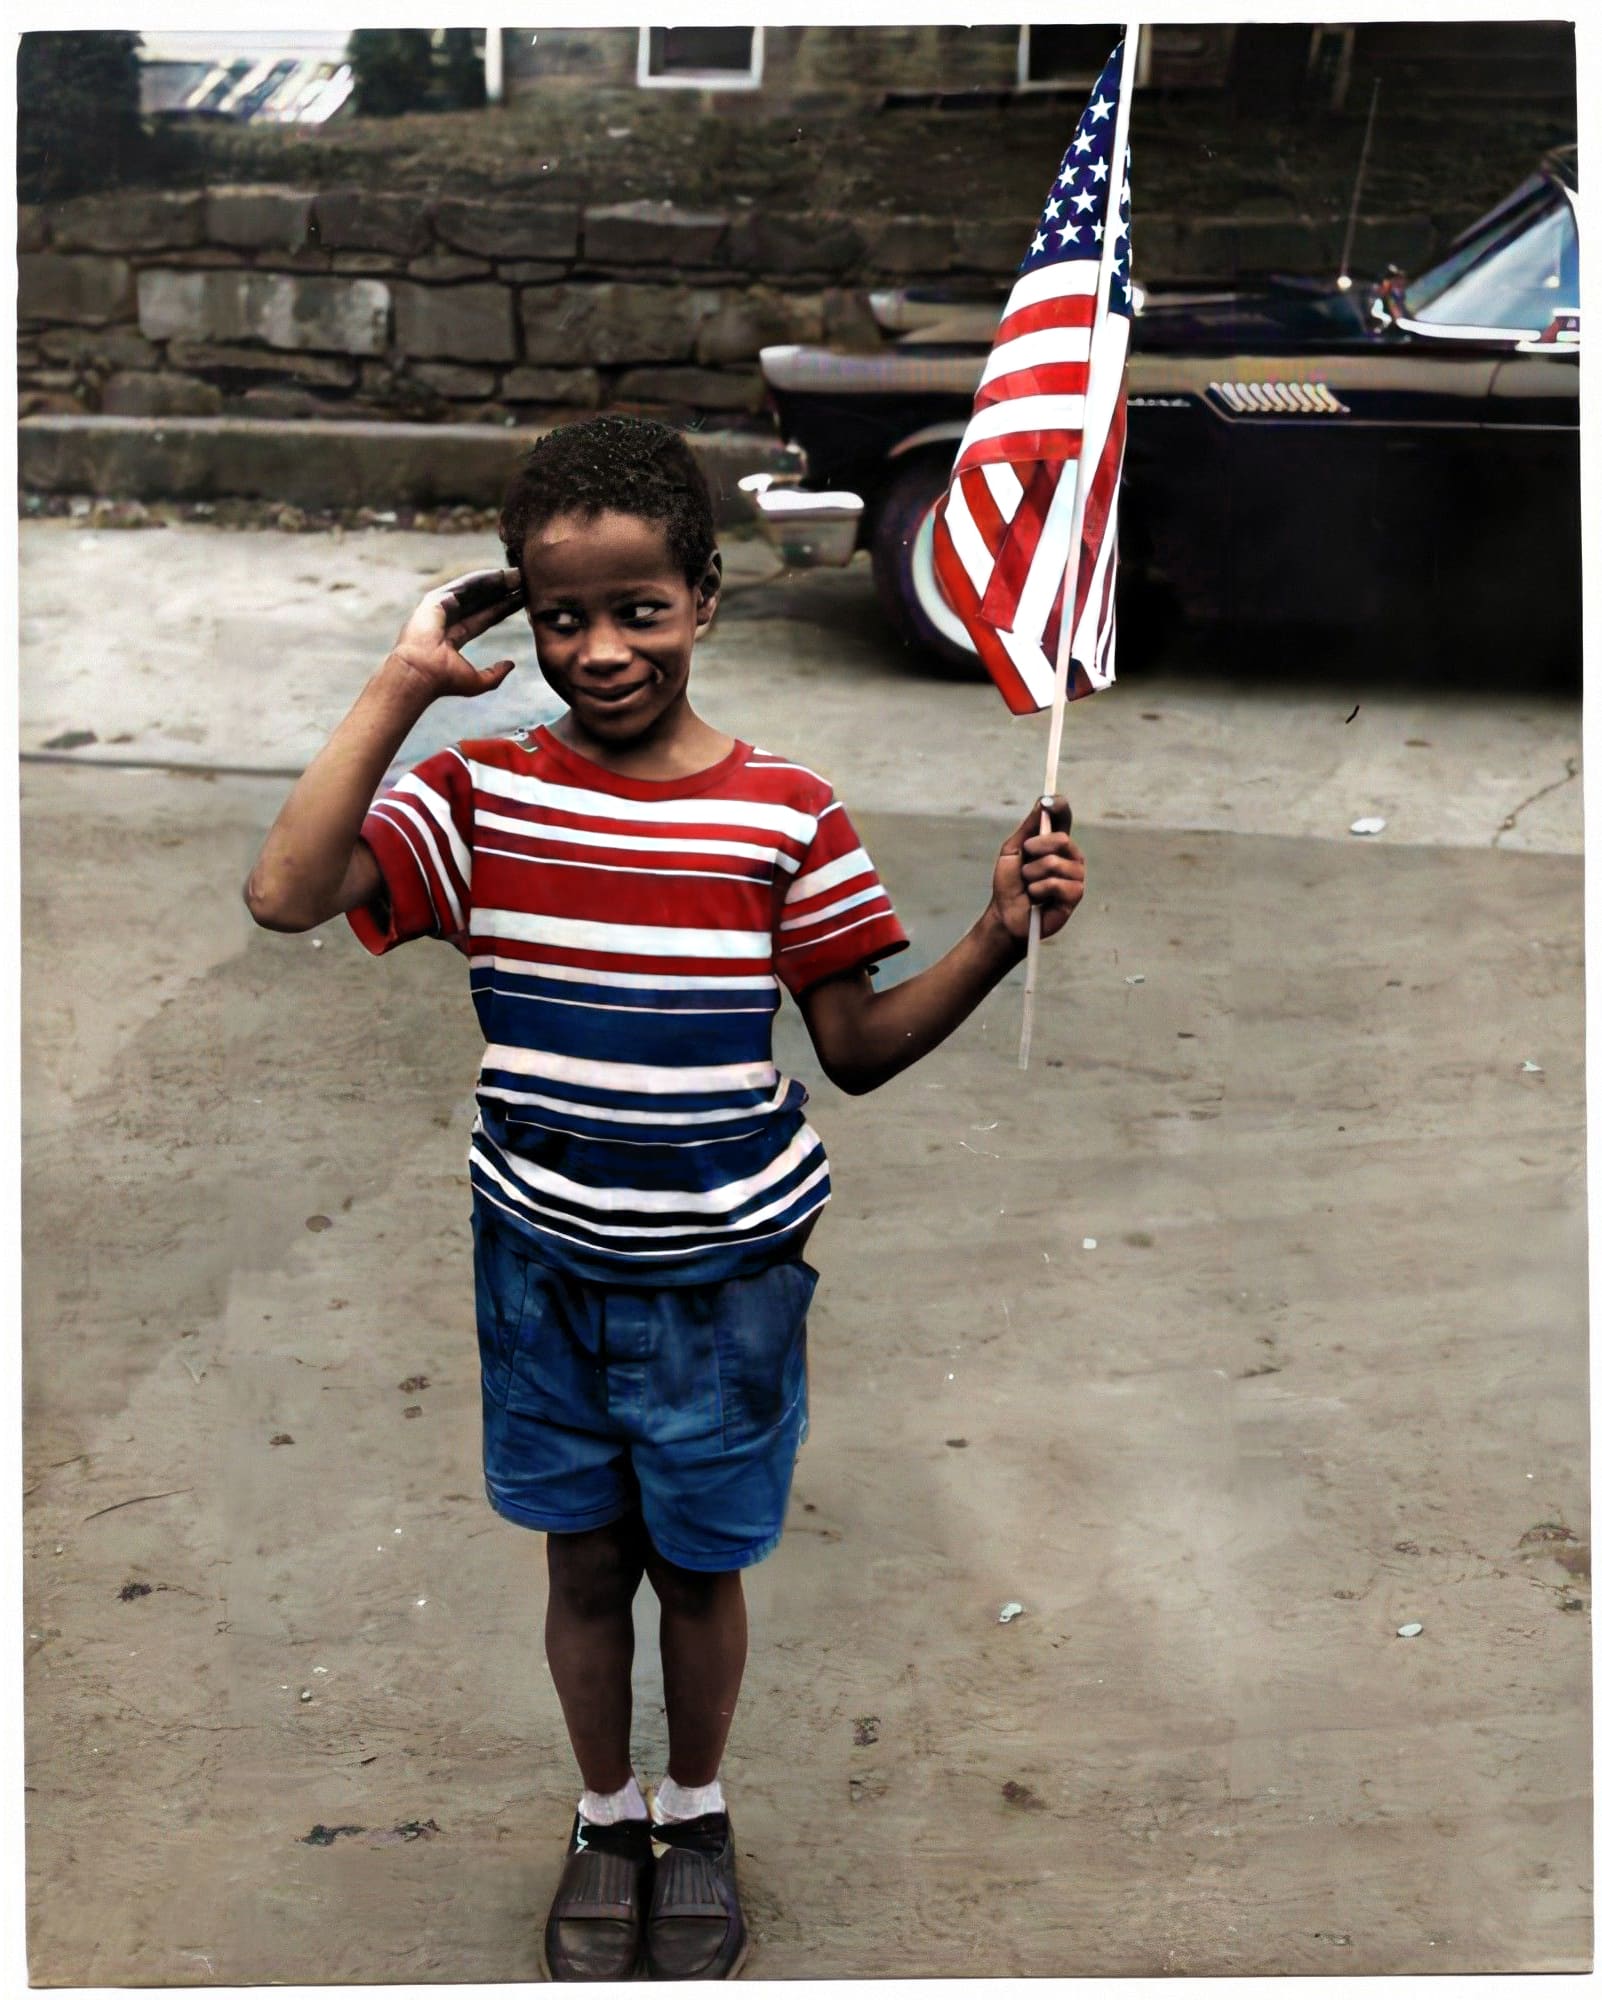 Boy holding an American flag, Morgantown, West Virginia, 1961. Courtesy of West Virginia University